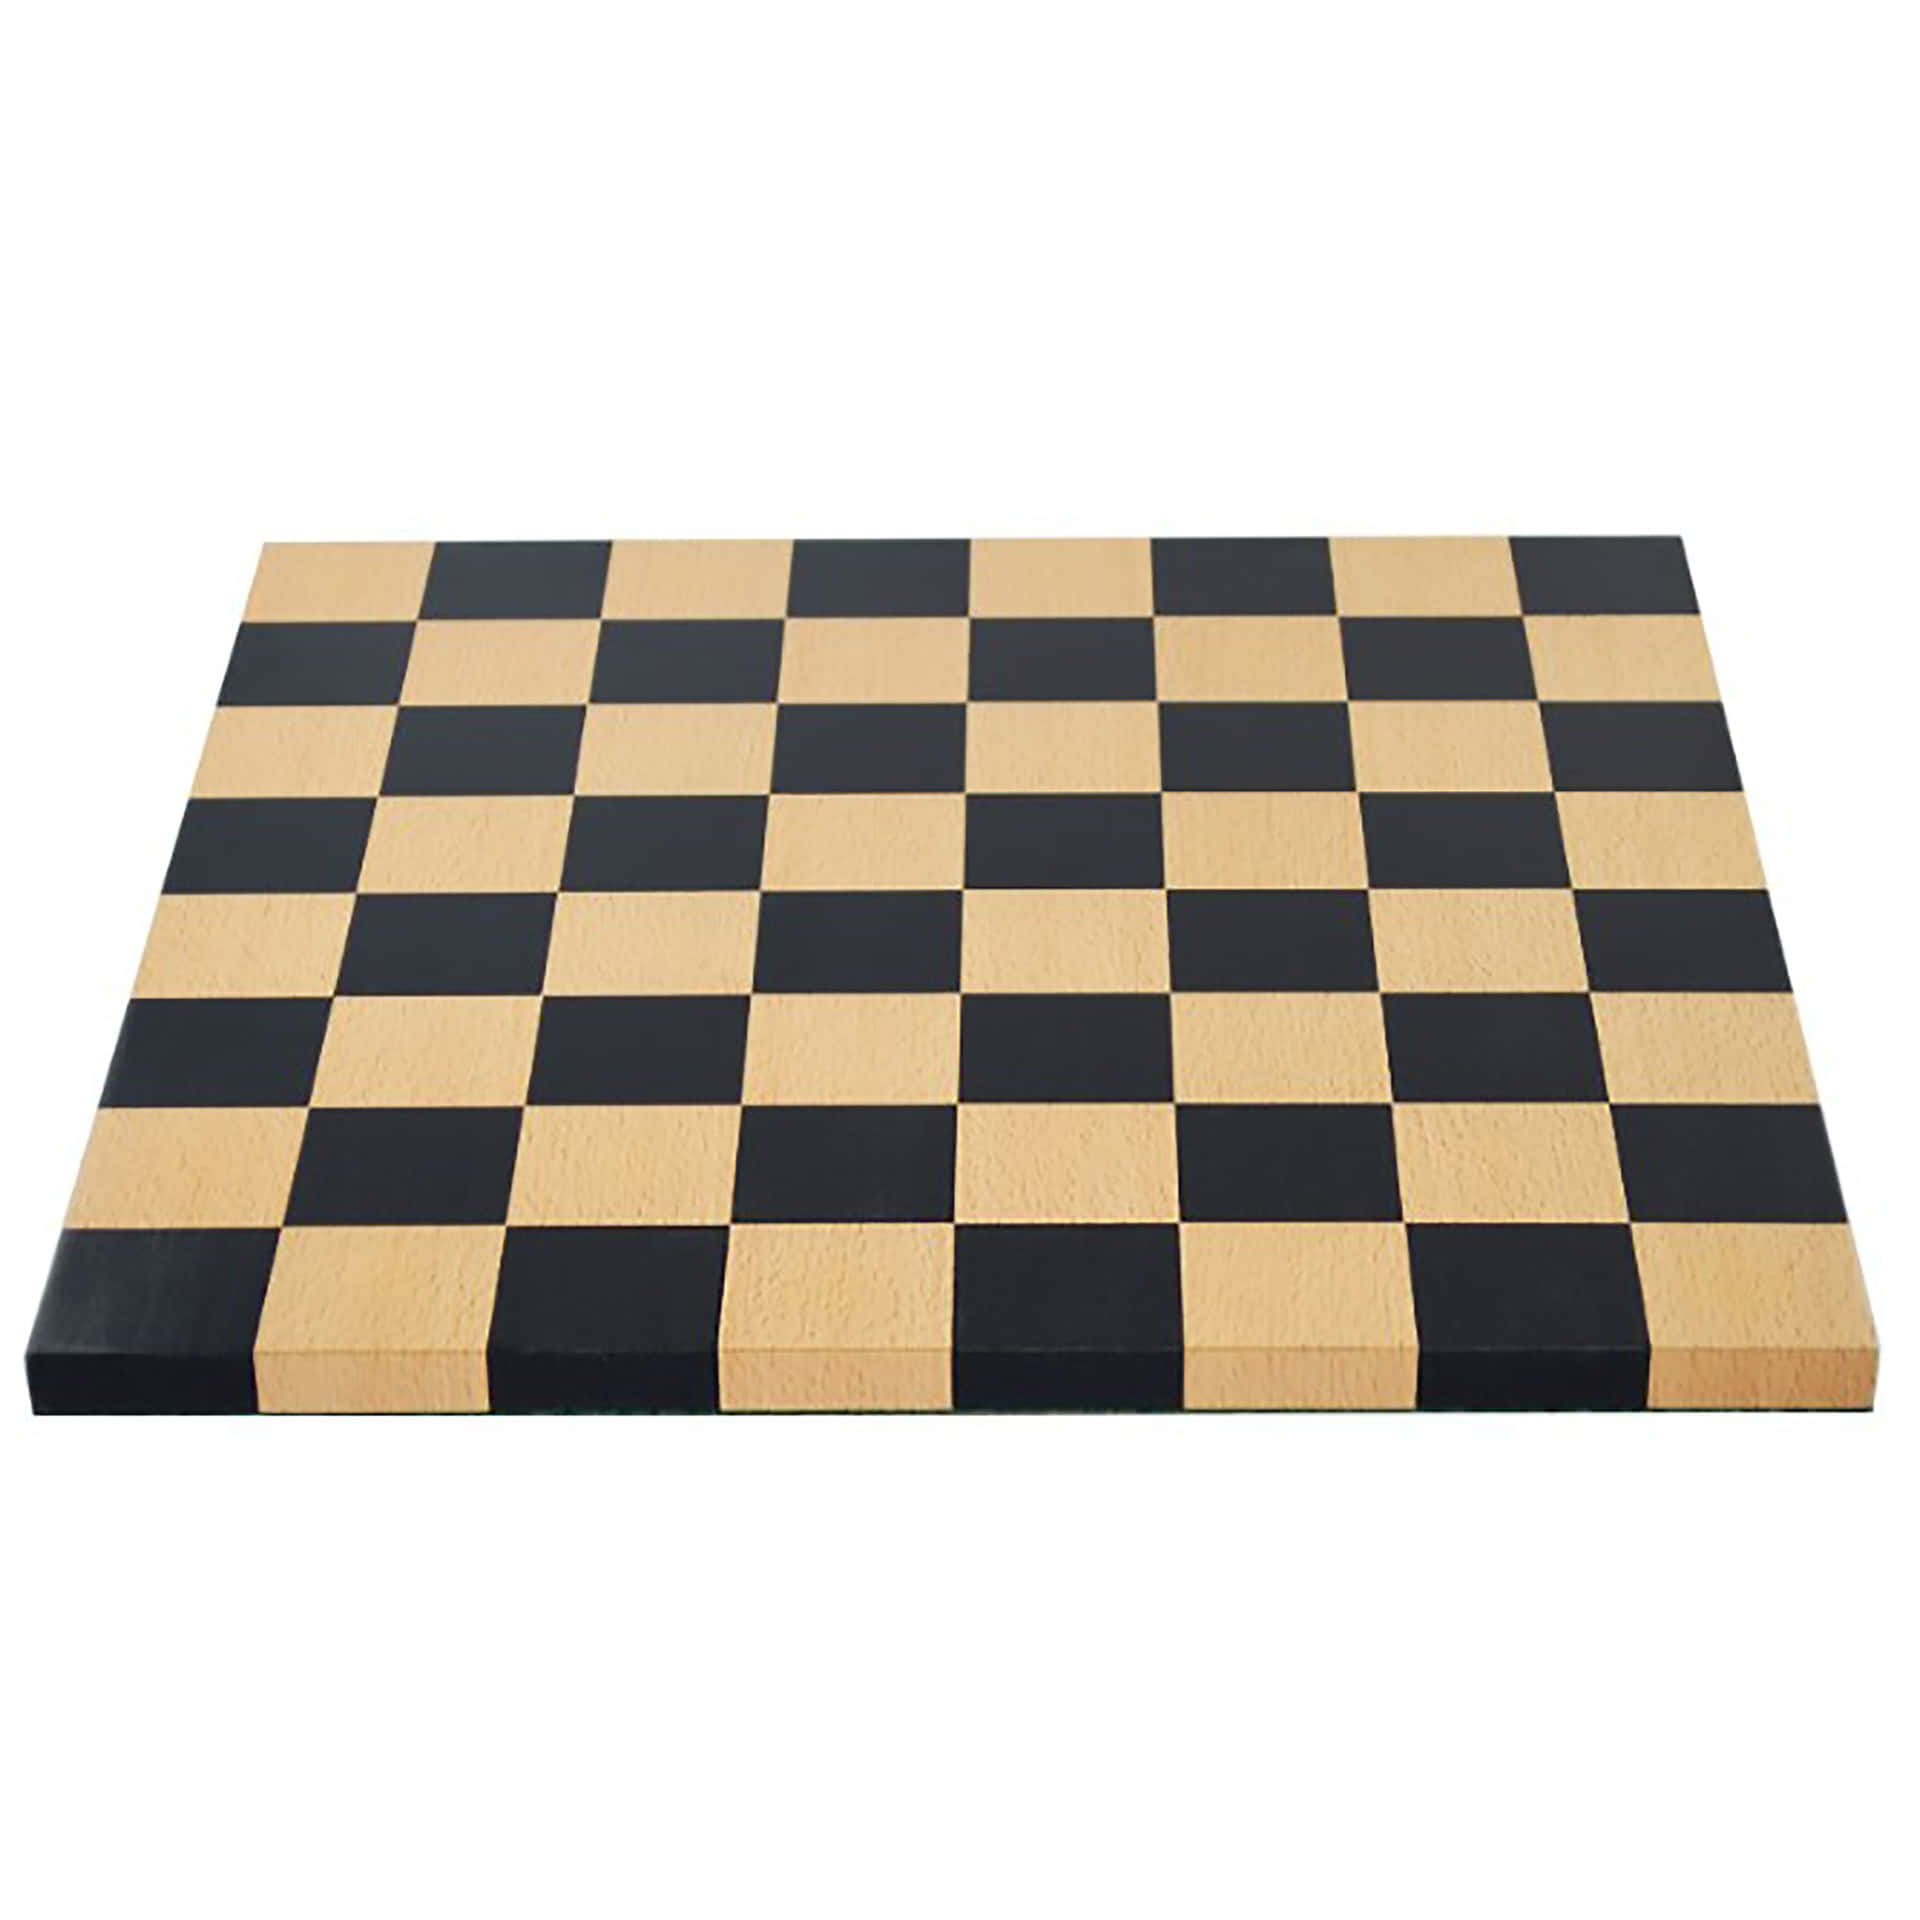 Strategizing On A Chessboard